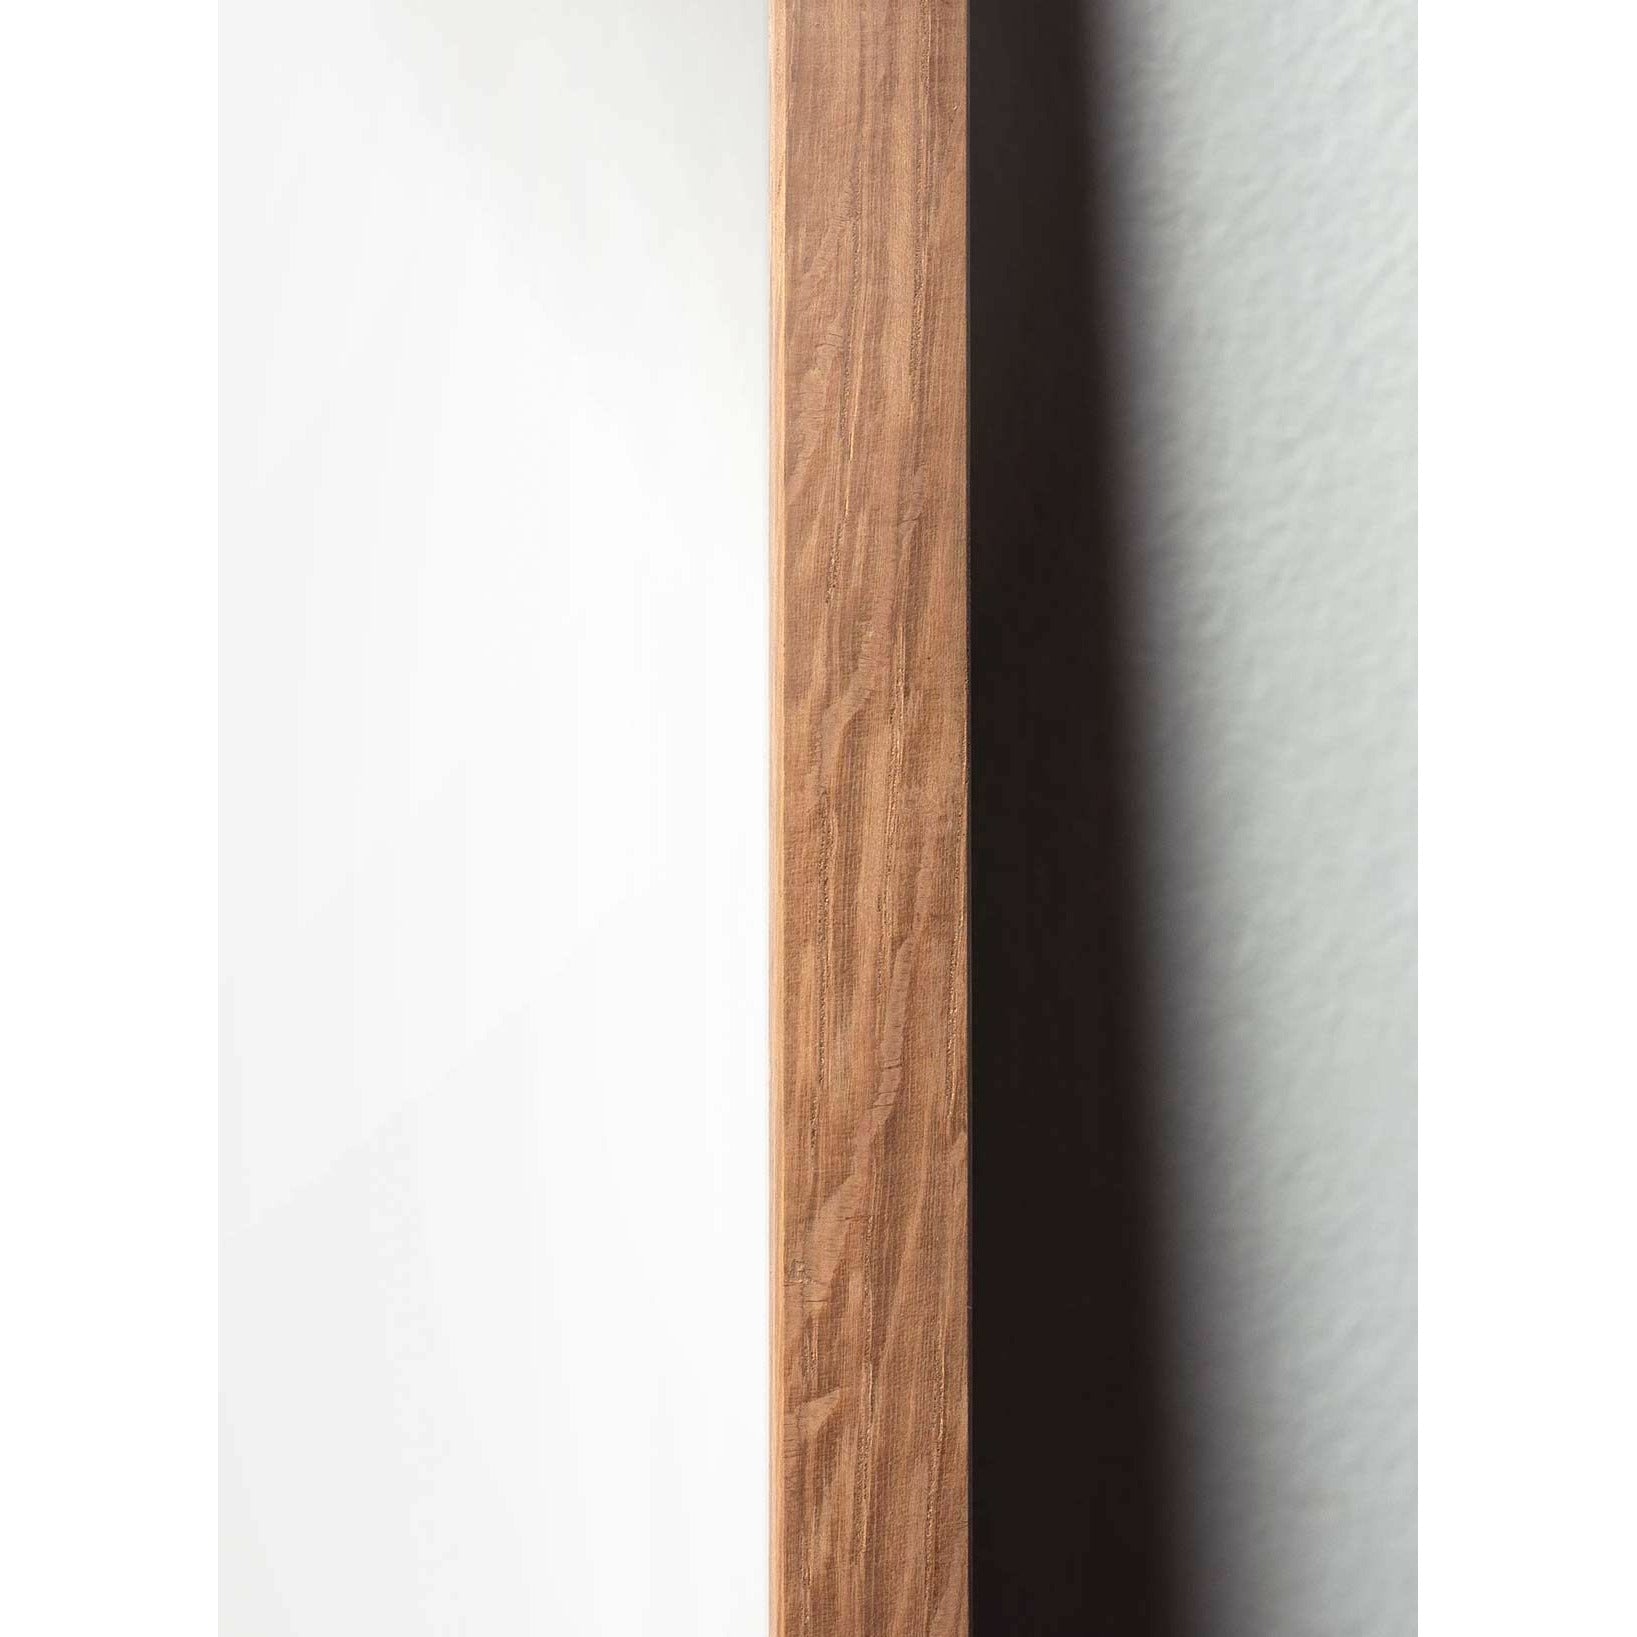 Póster de línea Swan de creación, marco hecho de madera clara de 30x40 cm, fondo blanco